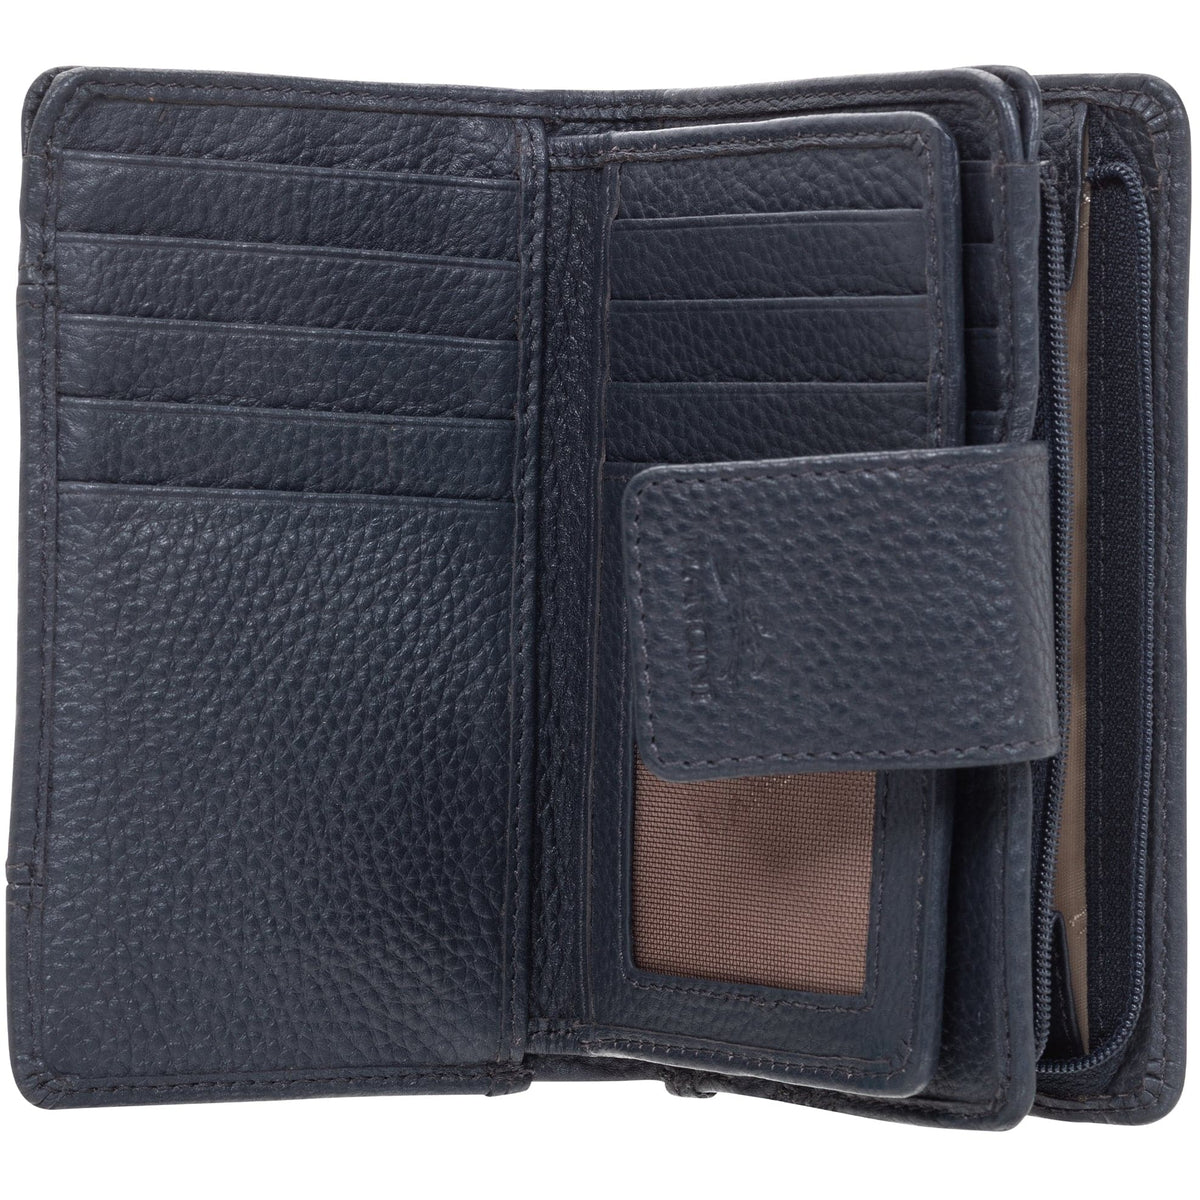 Mancini Pebbled Ladies’ RFID Medium Clutch Wallet